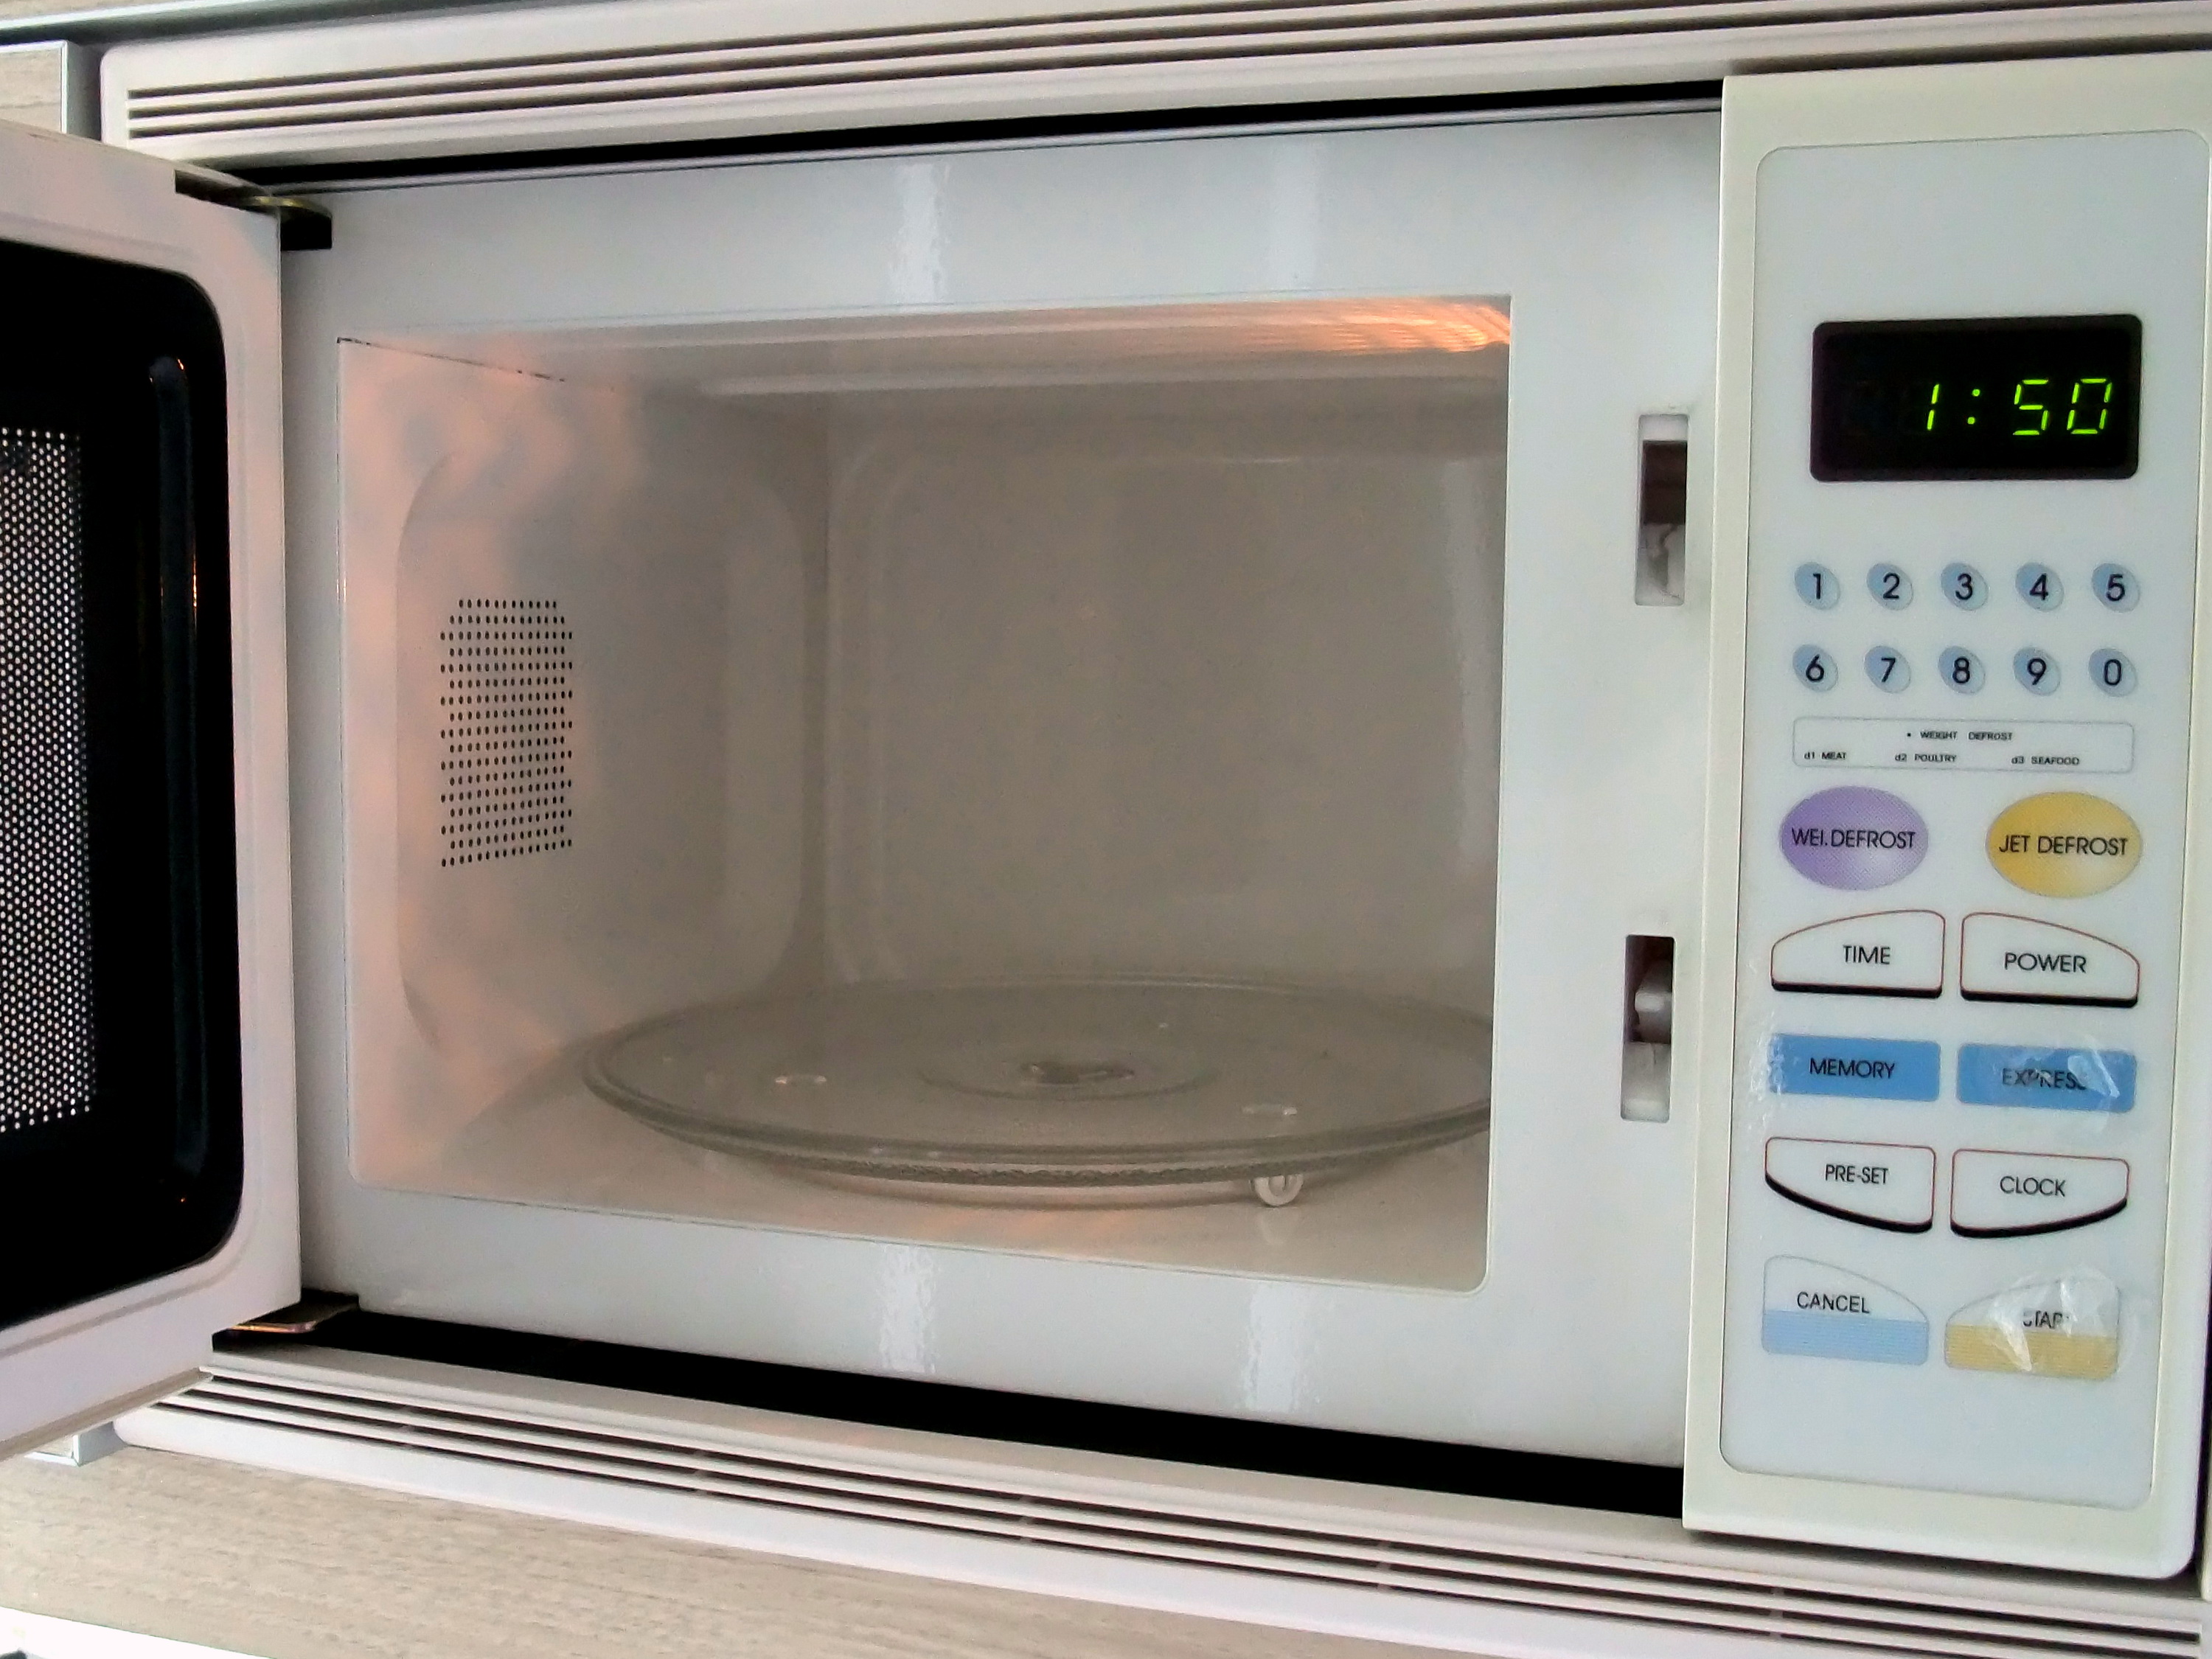 microwaves heat food